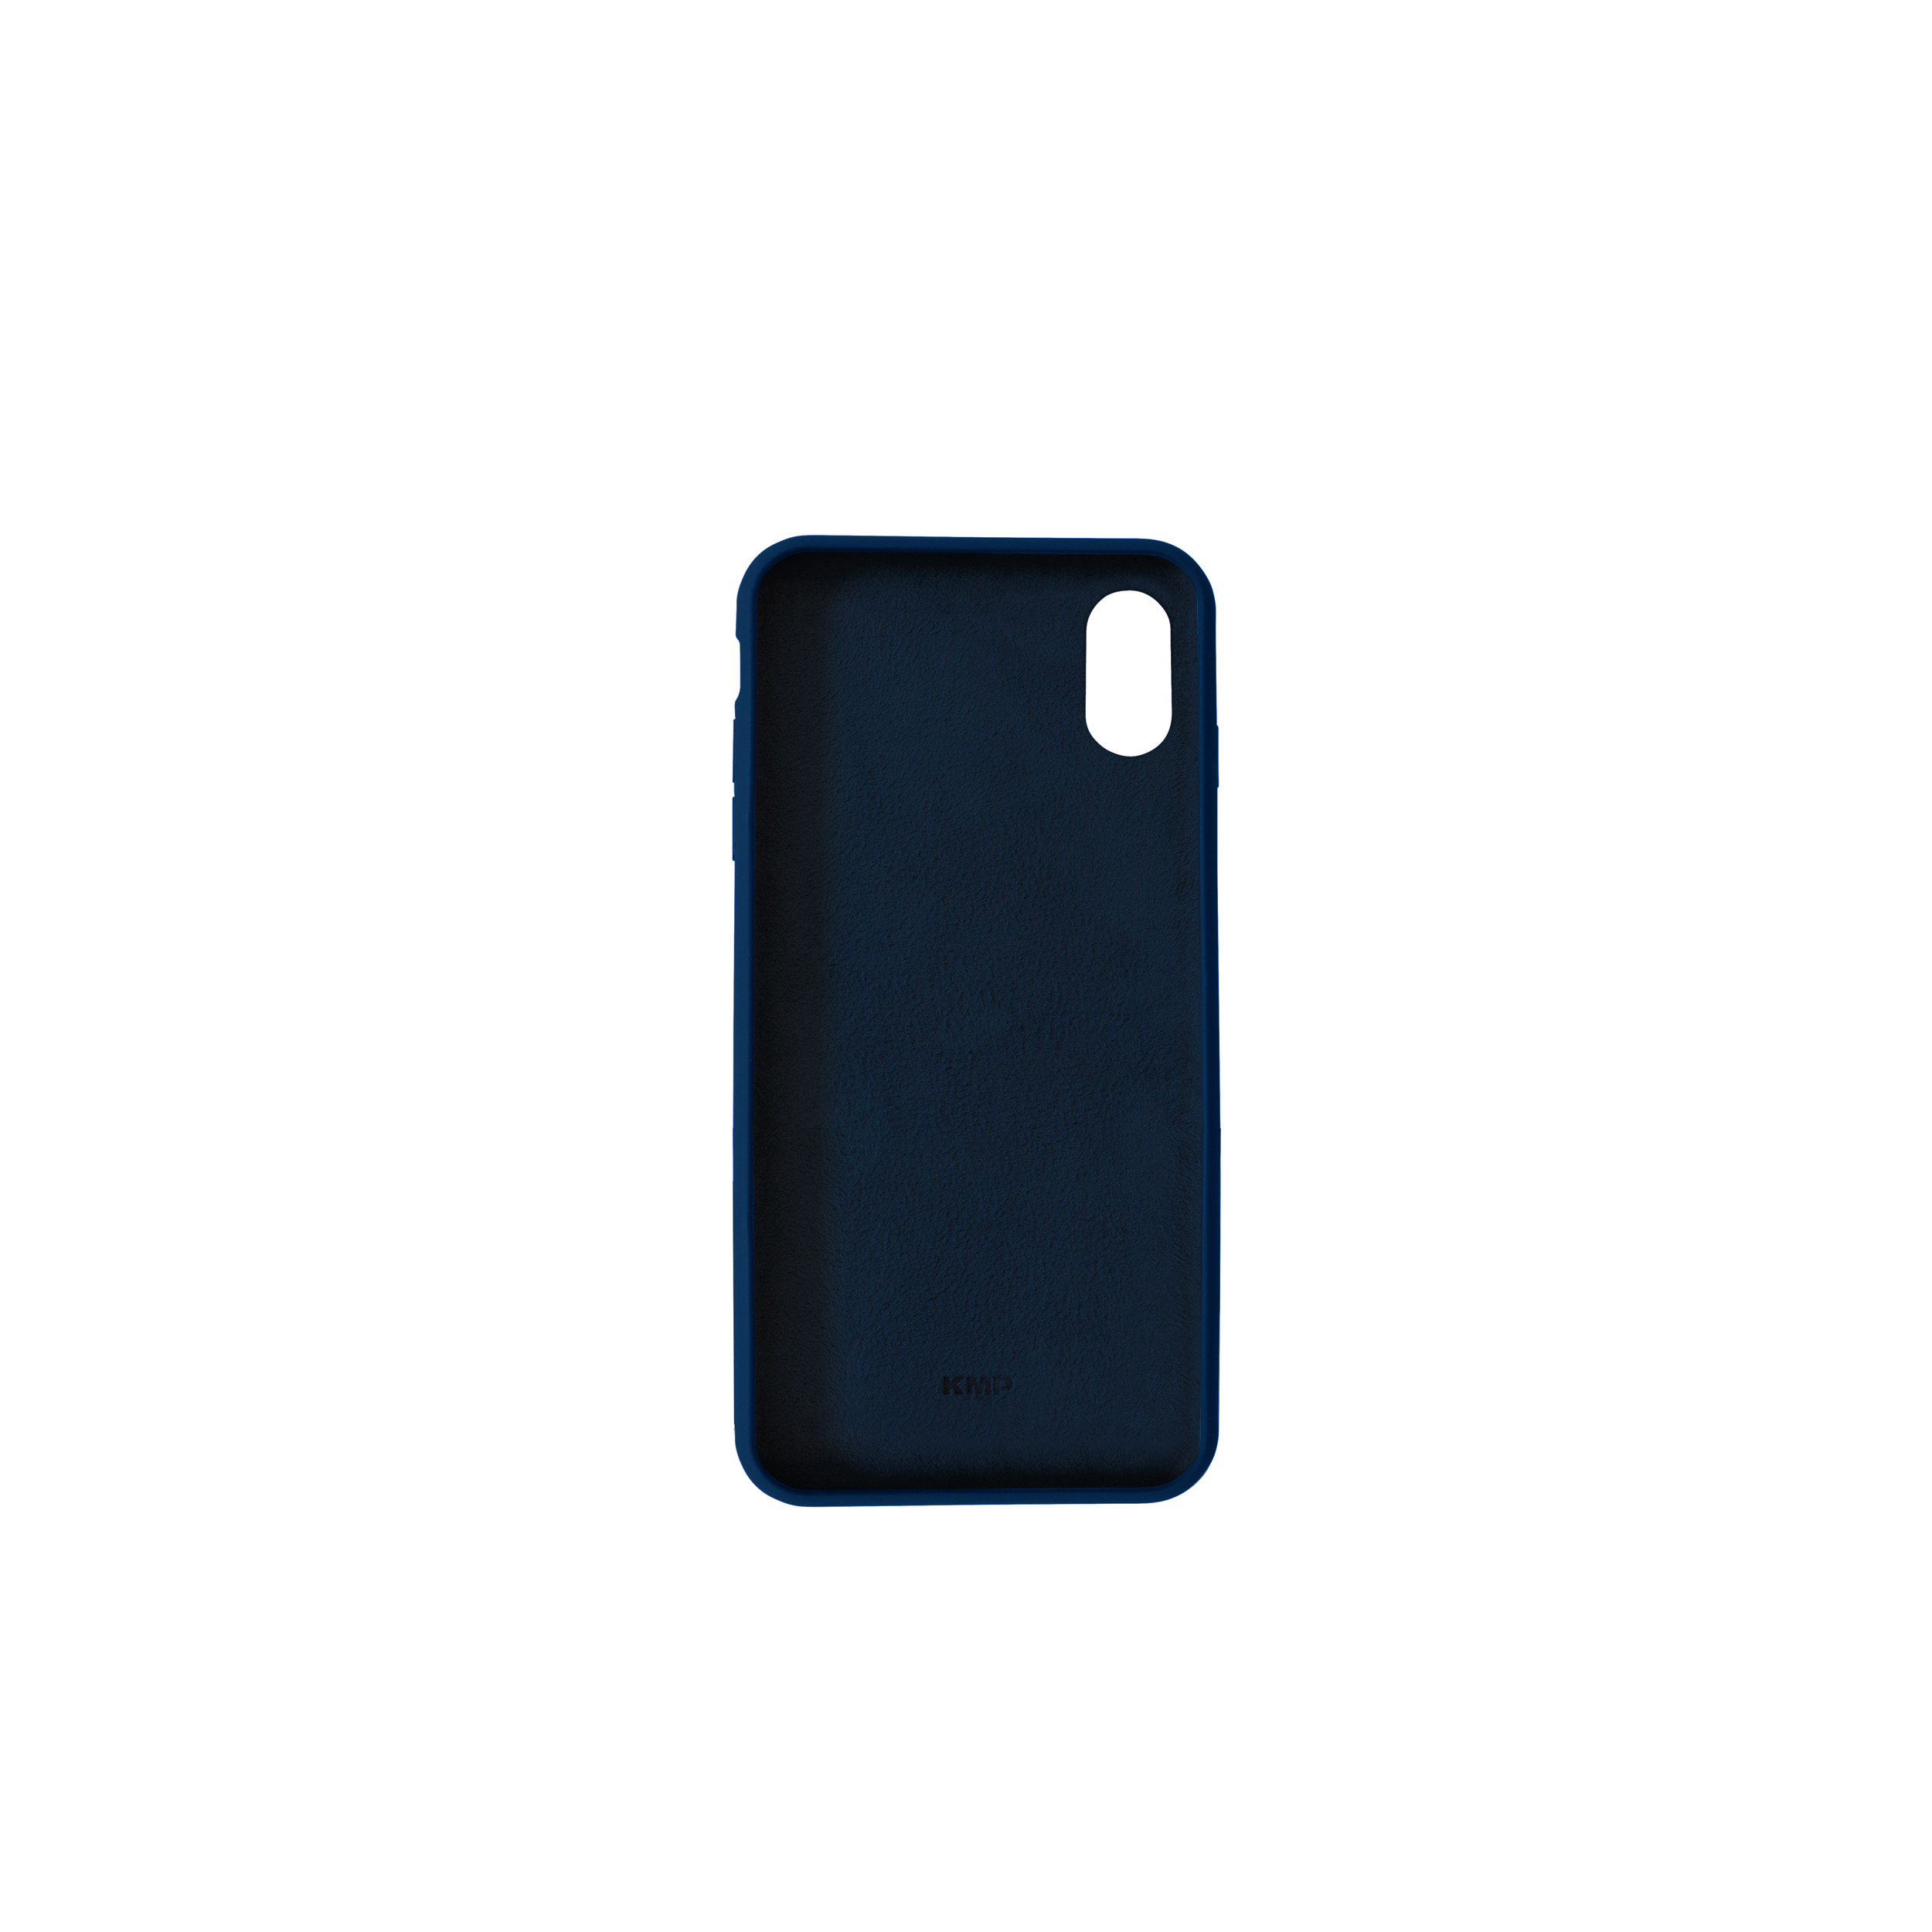 Sargasso Apple, Max Silikon sargasso Blue, blue Full XS Max, KMP XS iPhone iPhone Schutzhülle für Cover,